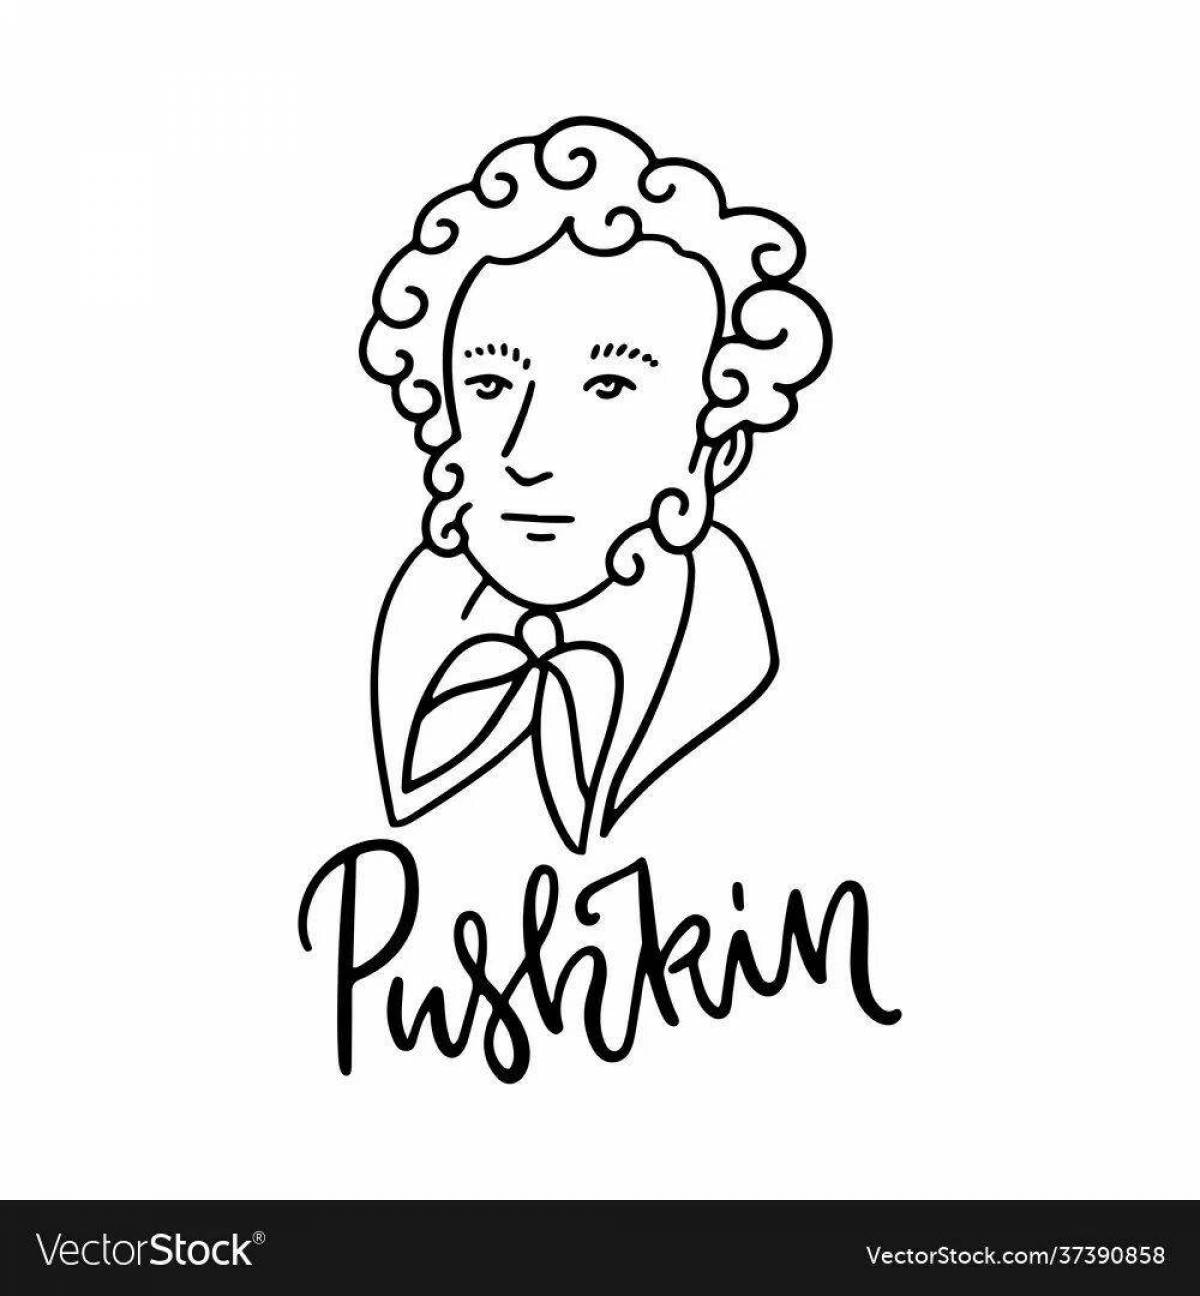 Coloring book radiant Pushkin's portrait